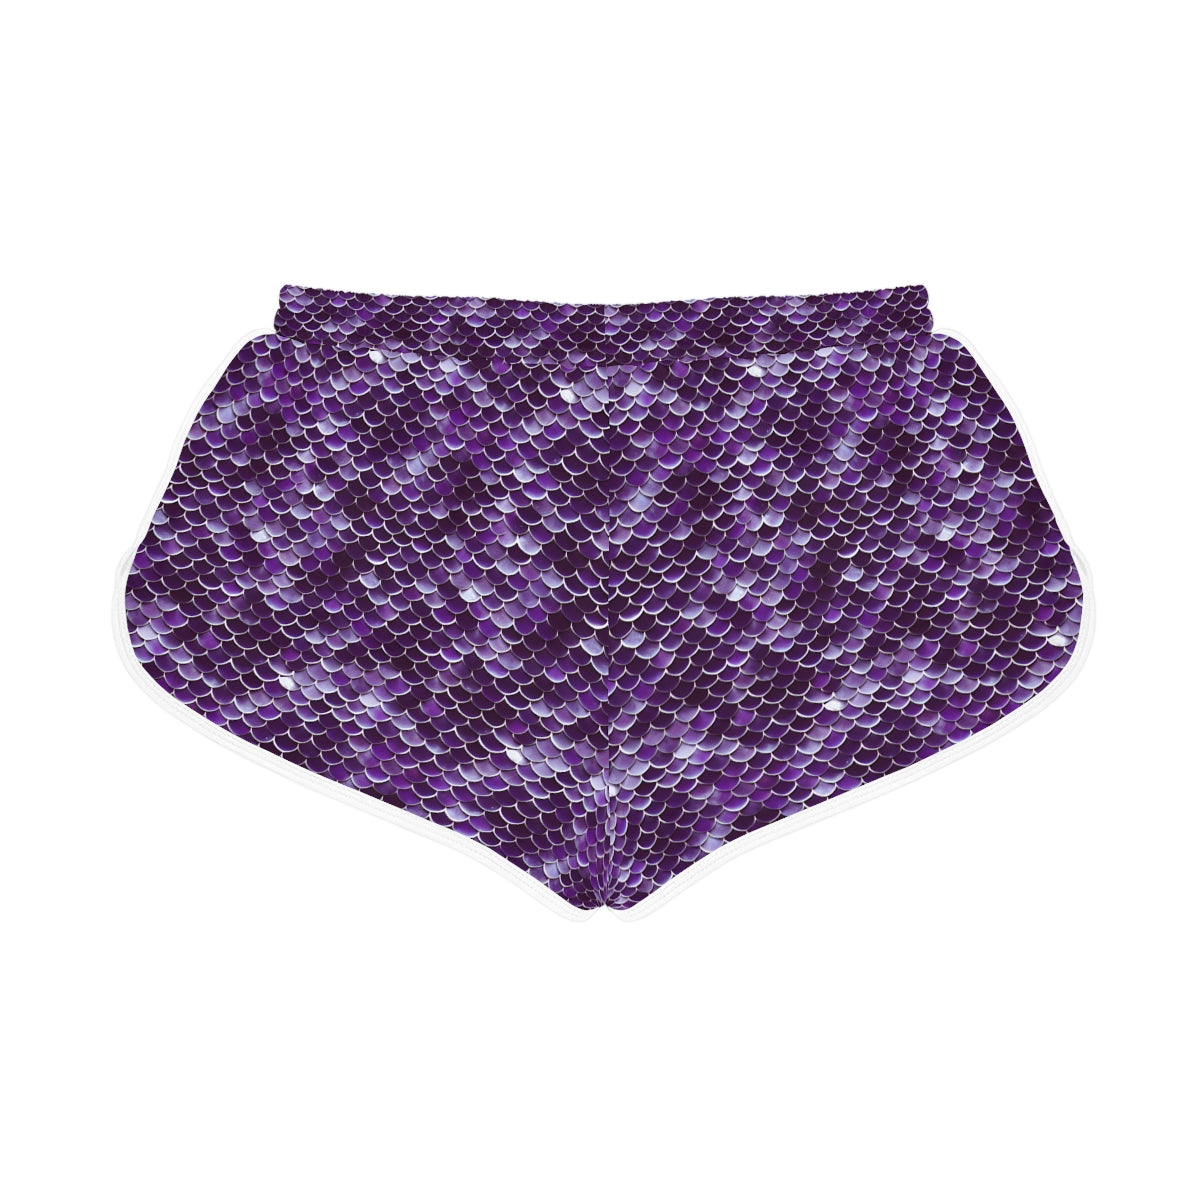 Fantasy Purple Mermaid Scales Women's Relaxed Shorts Ocean Inspired Design, Beach, Pool, Gym, Workout Wear, Athleticwear, Beachwear